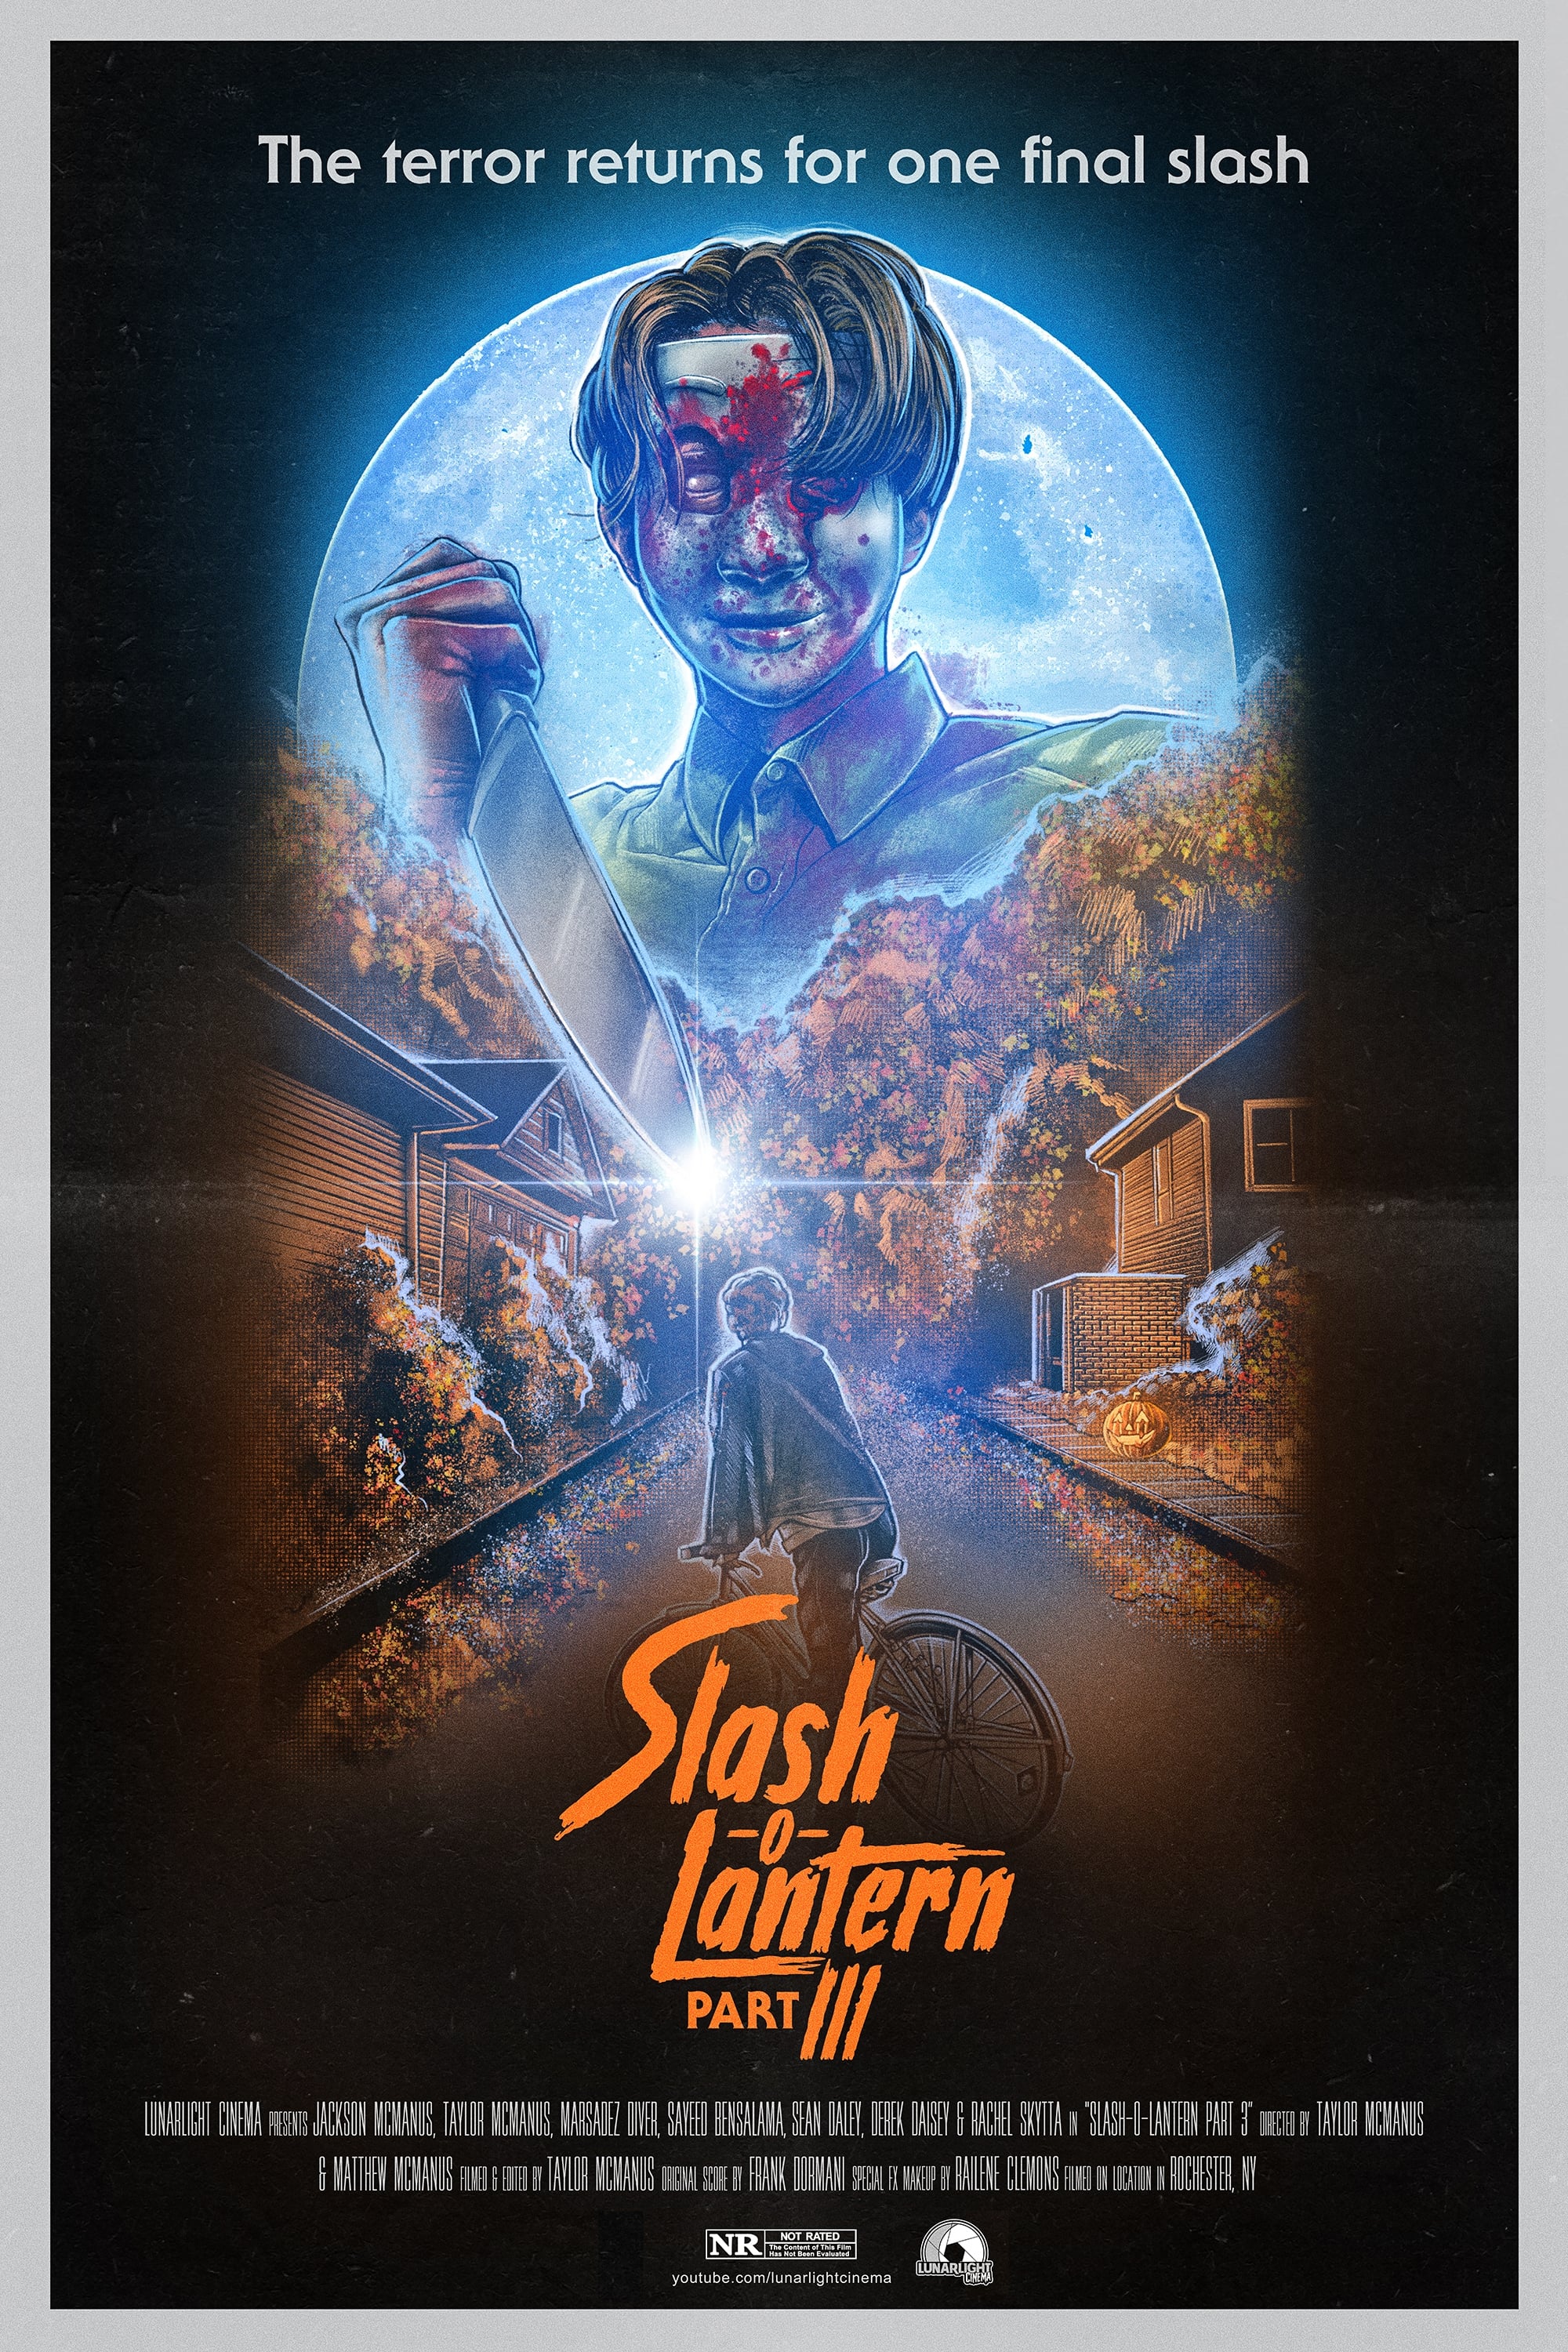 Slash-O-Lantern Part III